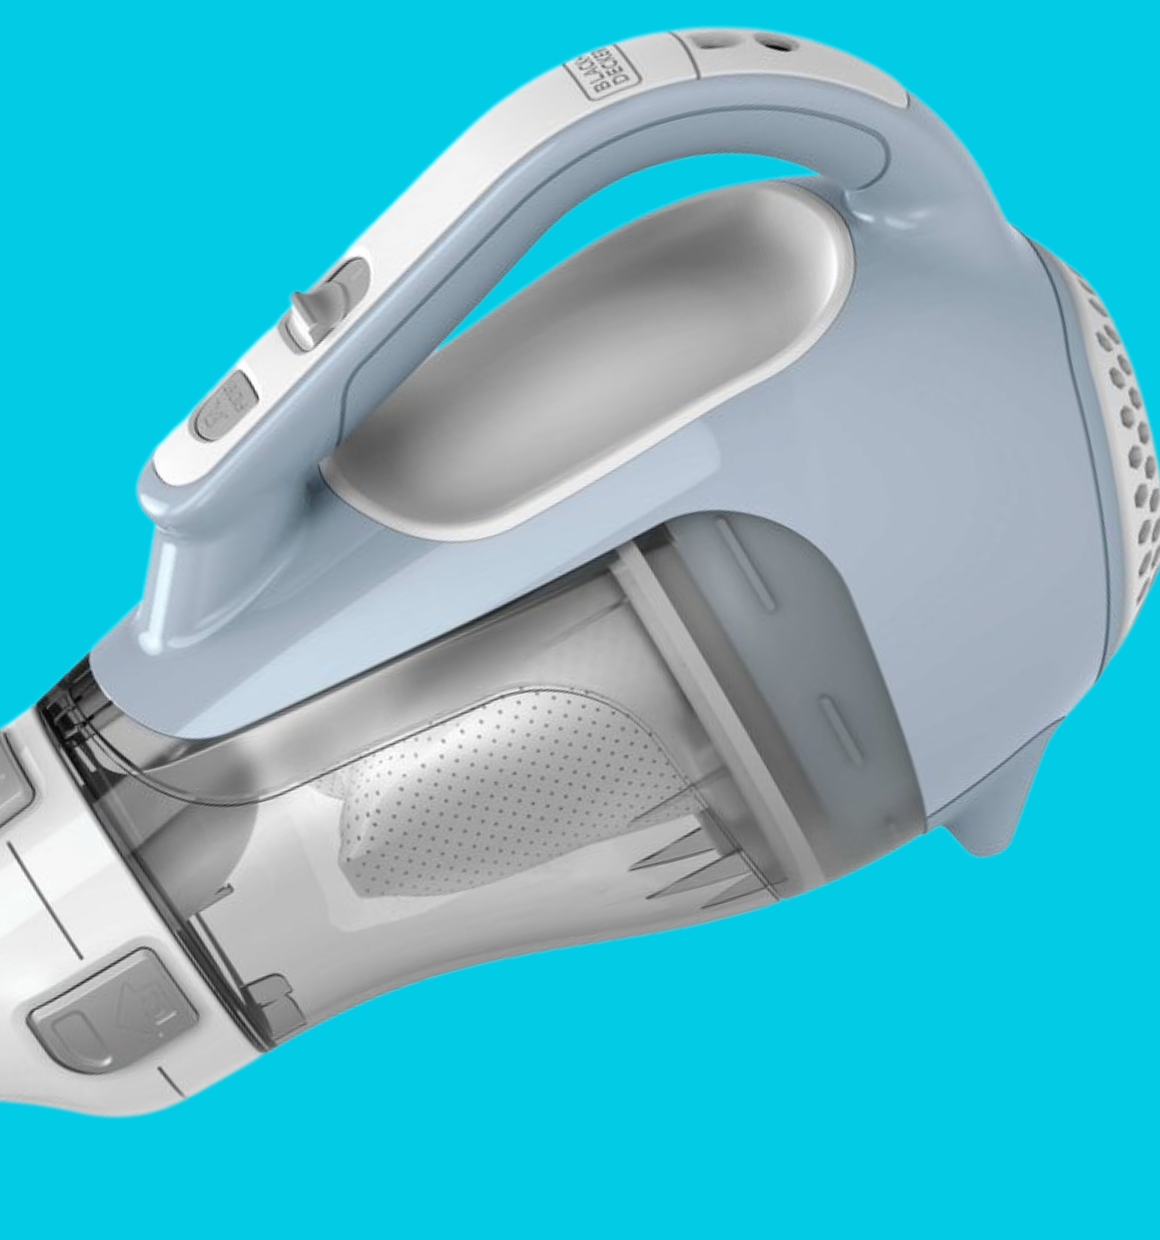 Dustbuster Advancedclean+ Cordless Handheld Vacuum